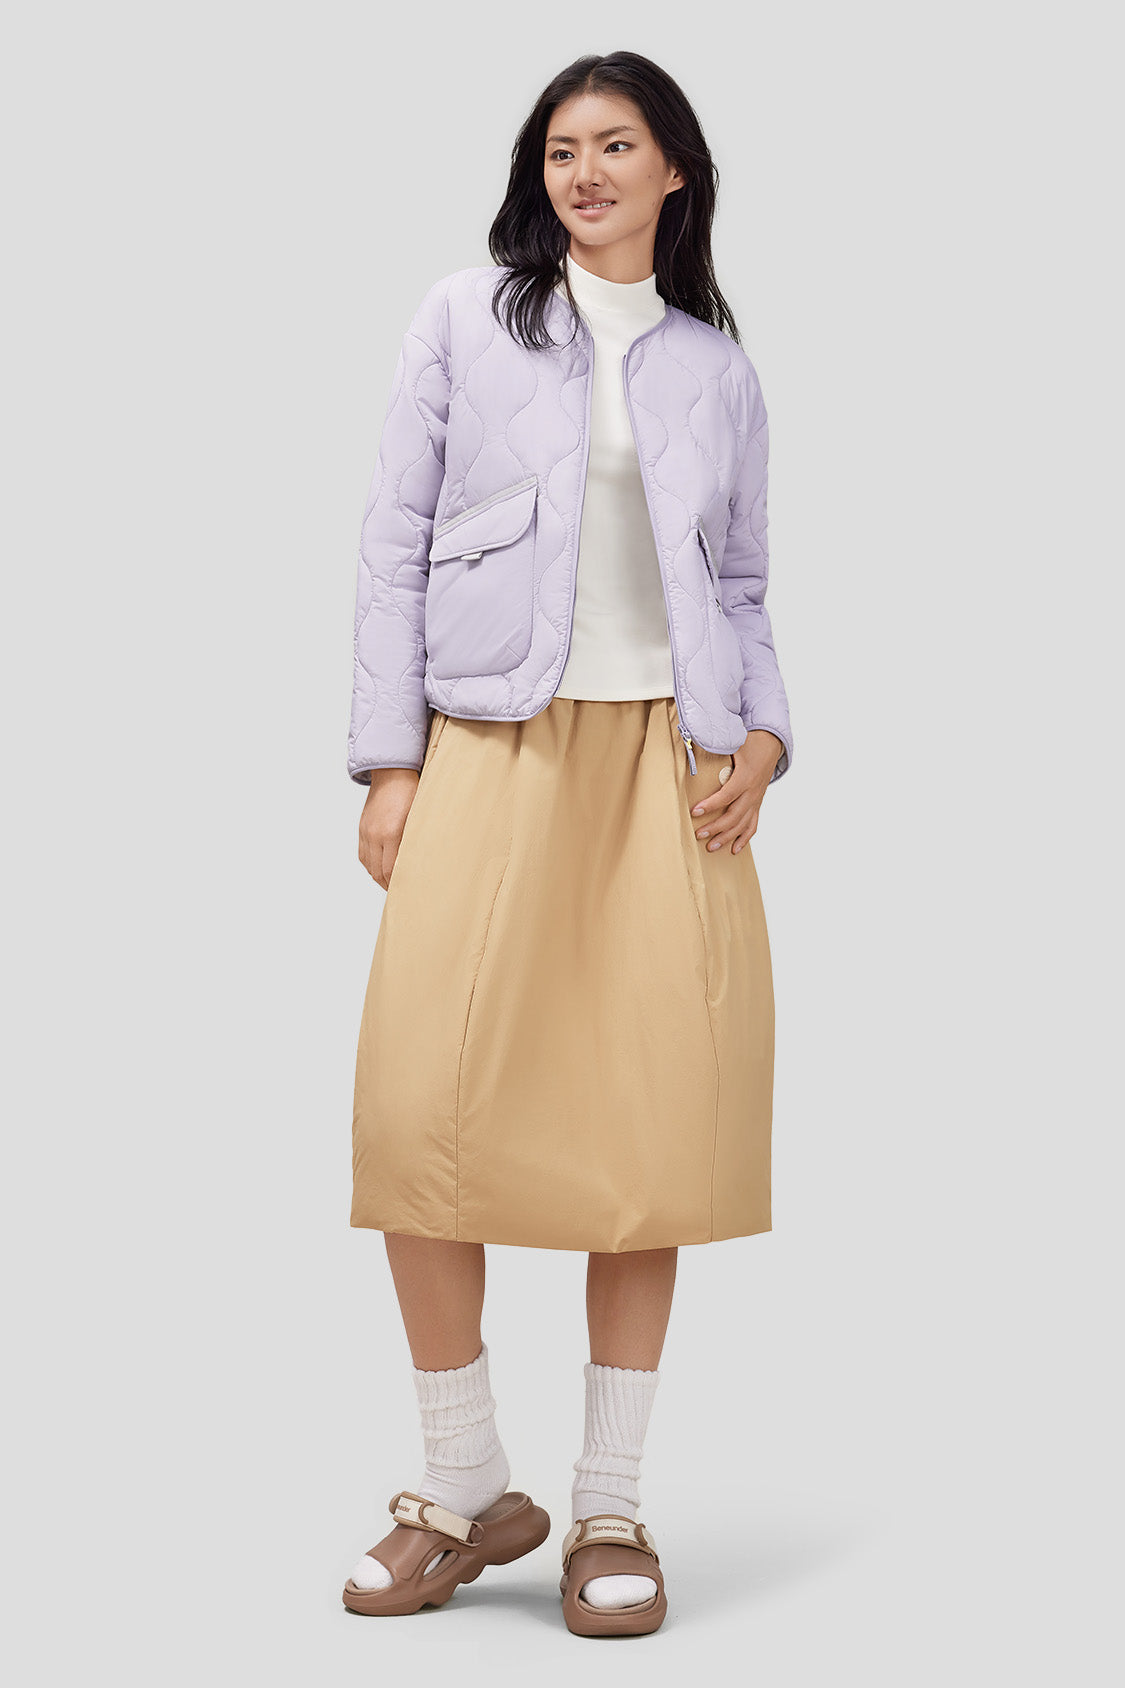 beneunder women's lightweight quilted jacket #color_lavender purple